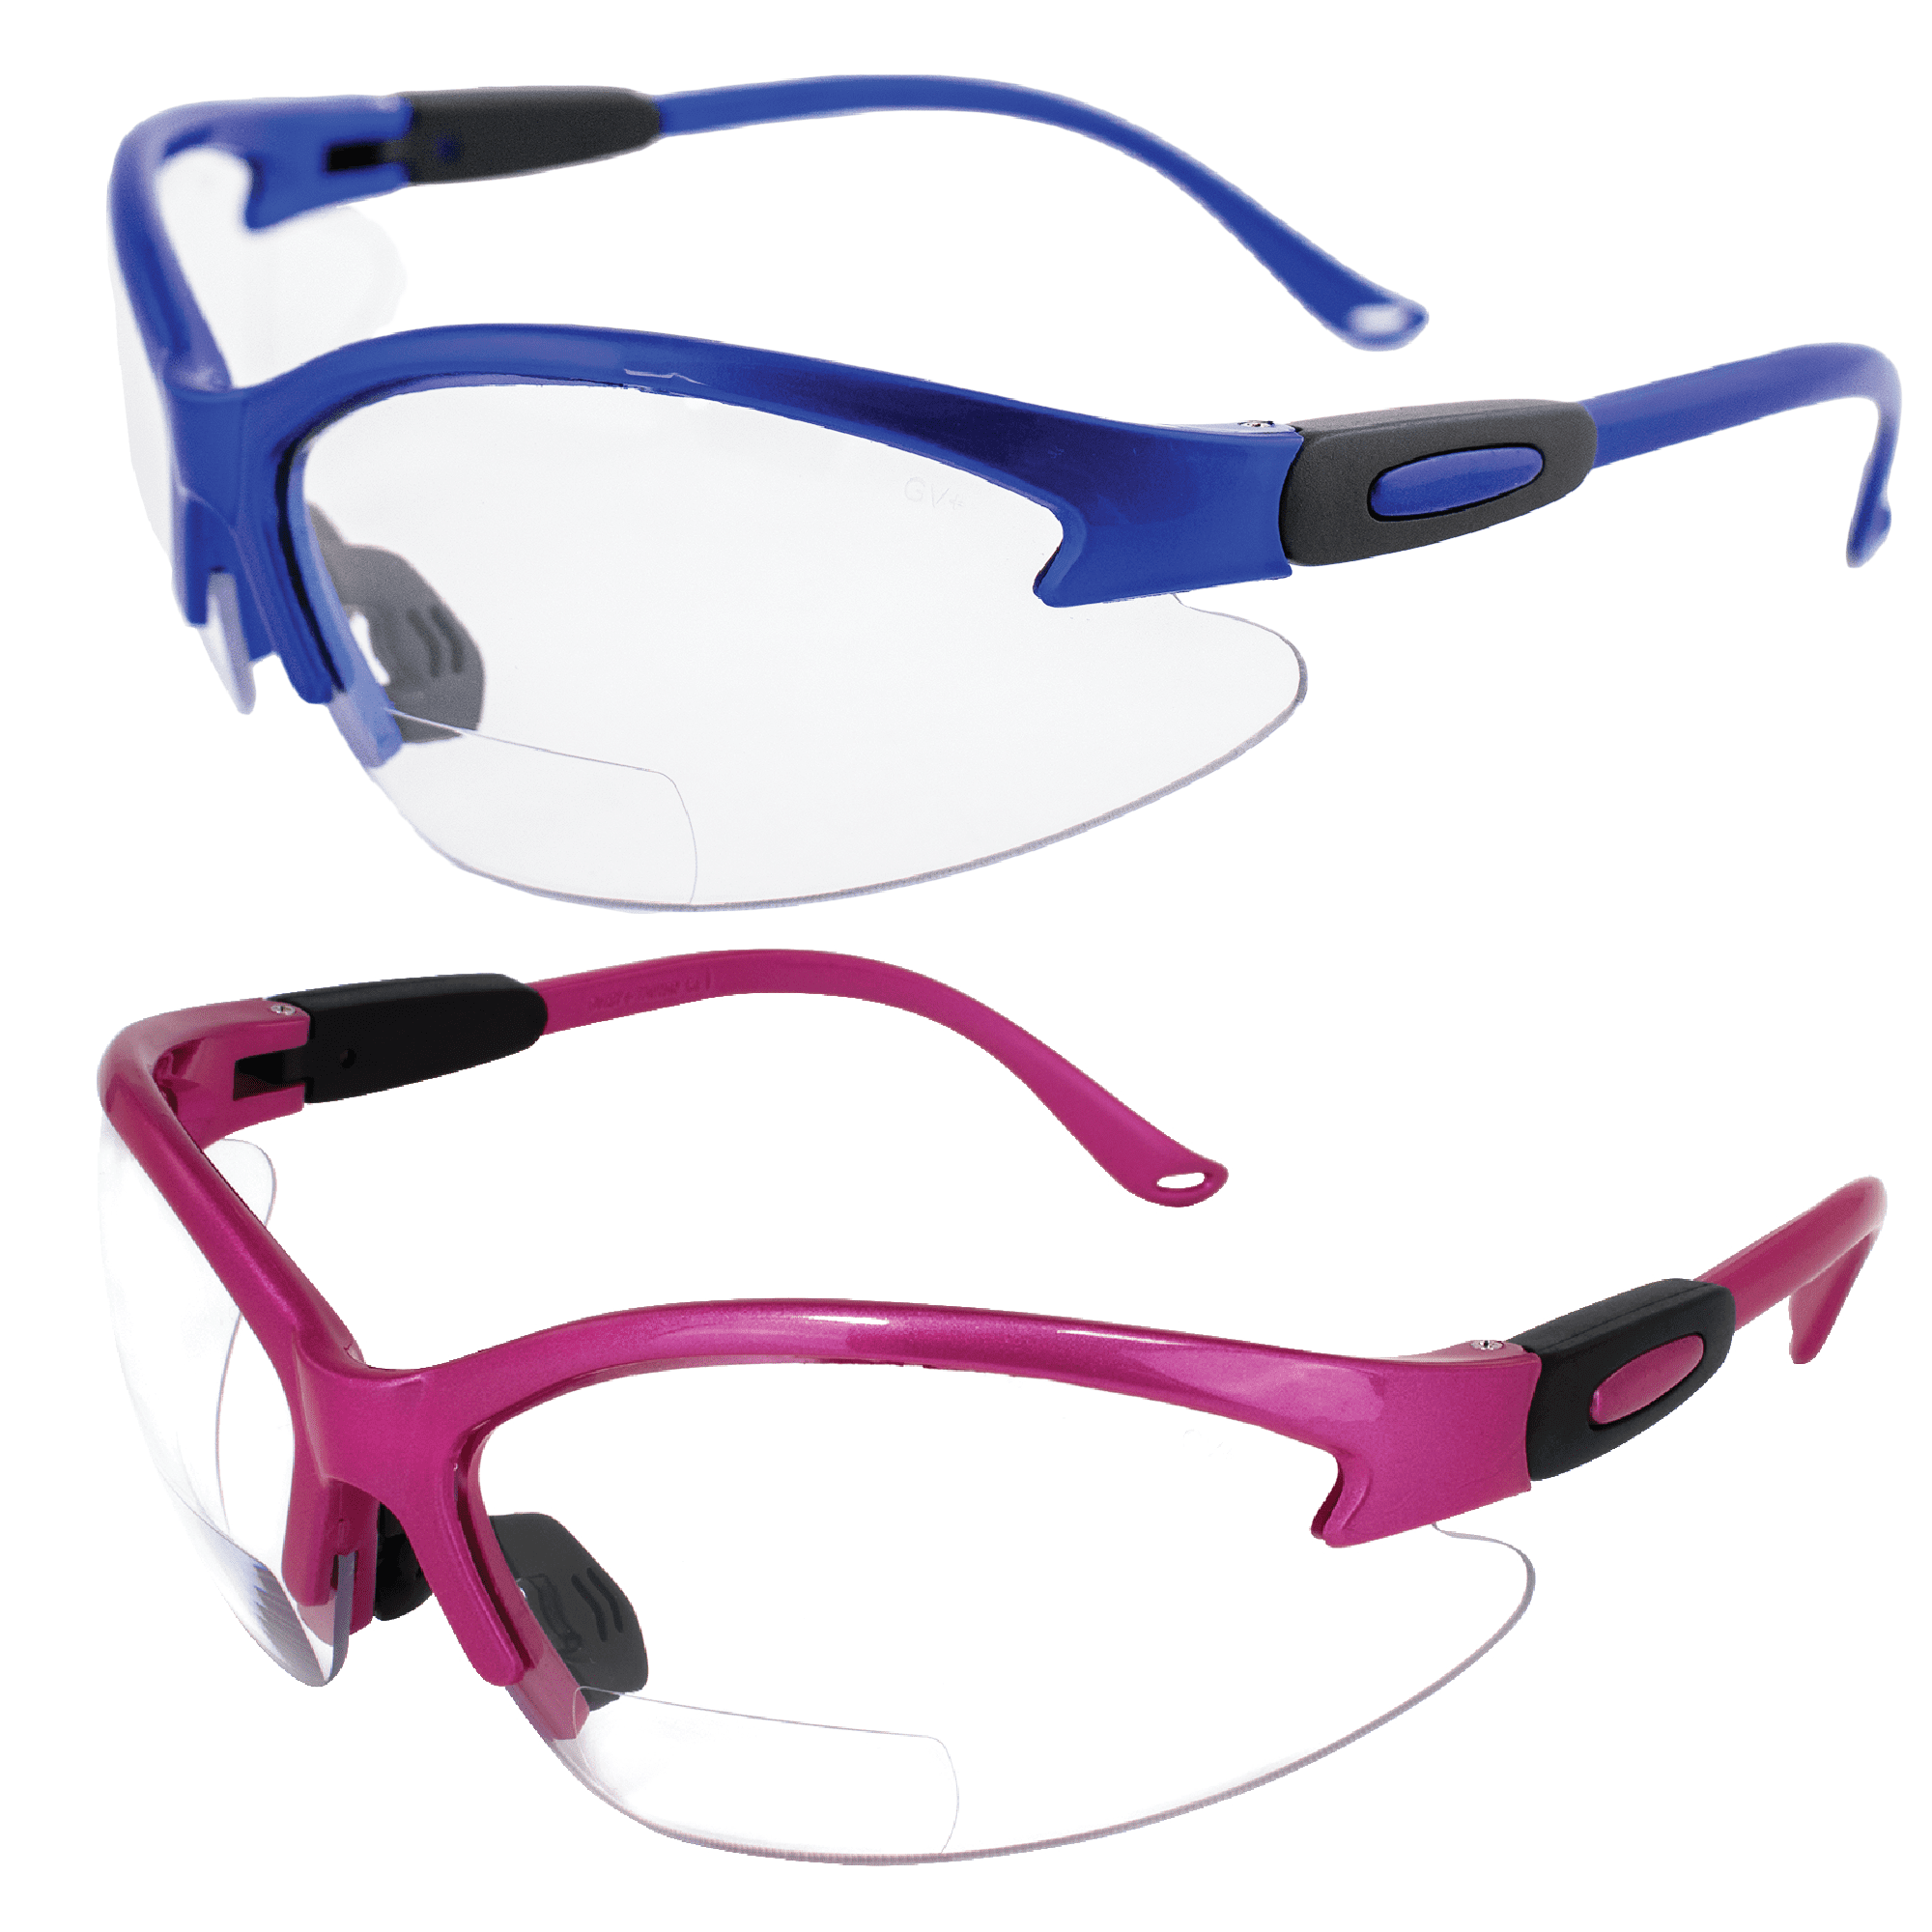 Birdz Eyewear Flamingo Safety Glasses for Nurses Dental Assistant Glasses Shooting  Sunglasses for Women Ladies Men 2 Pairs Black Hot Pink & Blue Frames  w/Clear Lens 2.0+ Magnification 